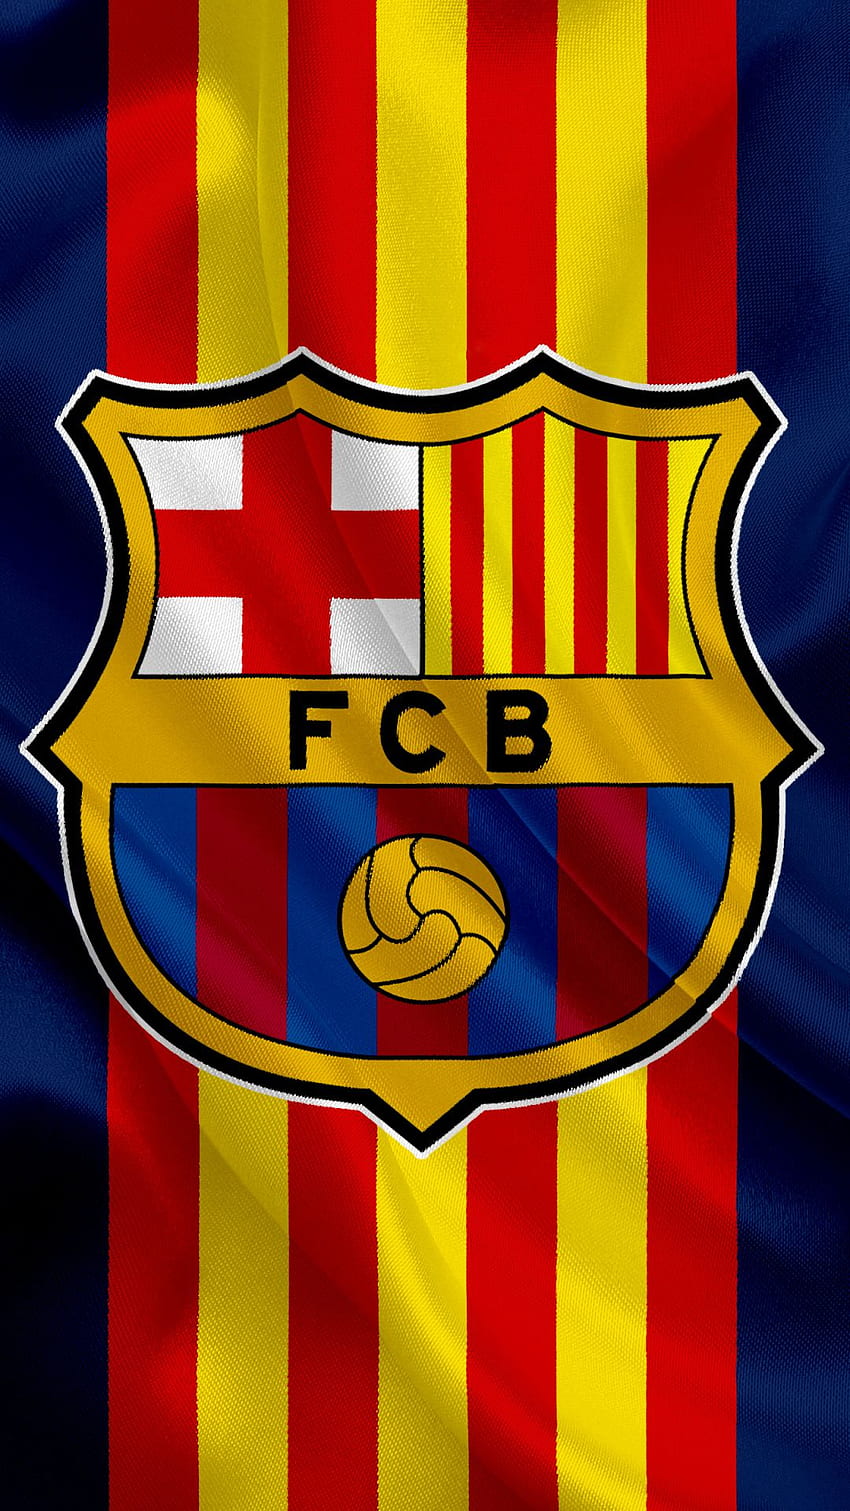 FC Barcelona Femení Wallpapers  Top 15 Best FC Barcelona Femení Wallpapers  Download